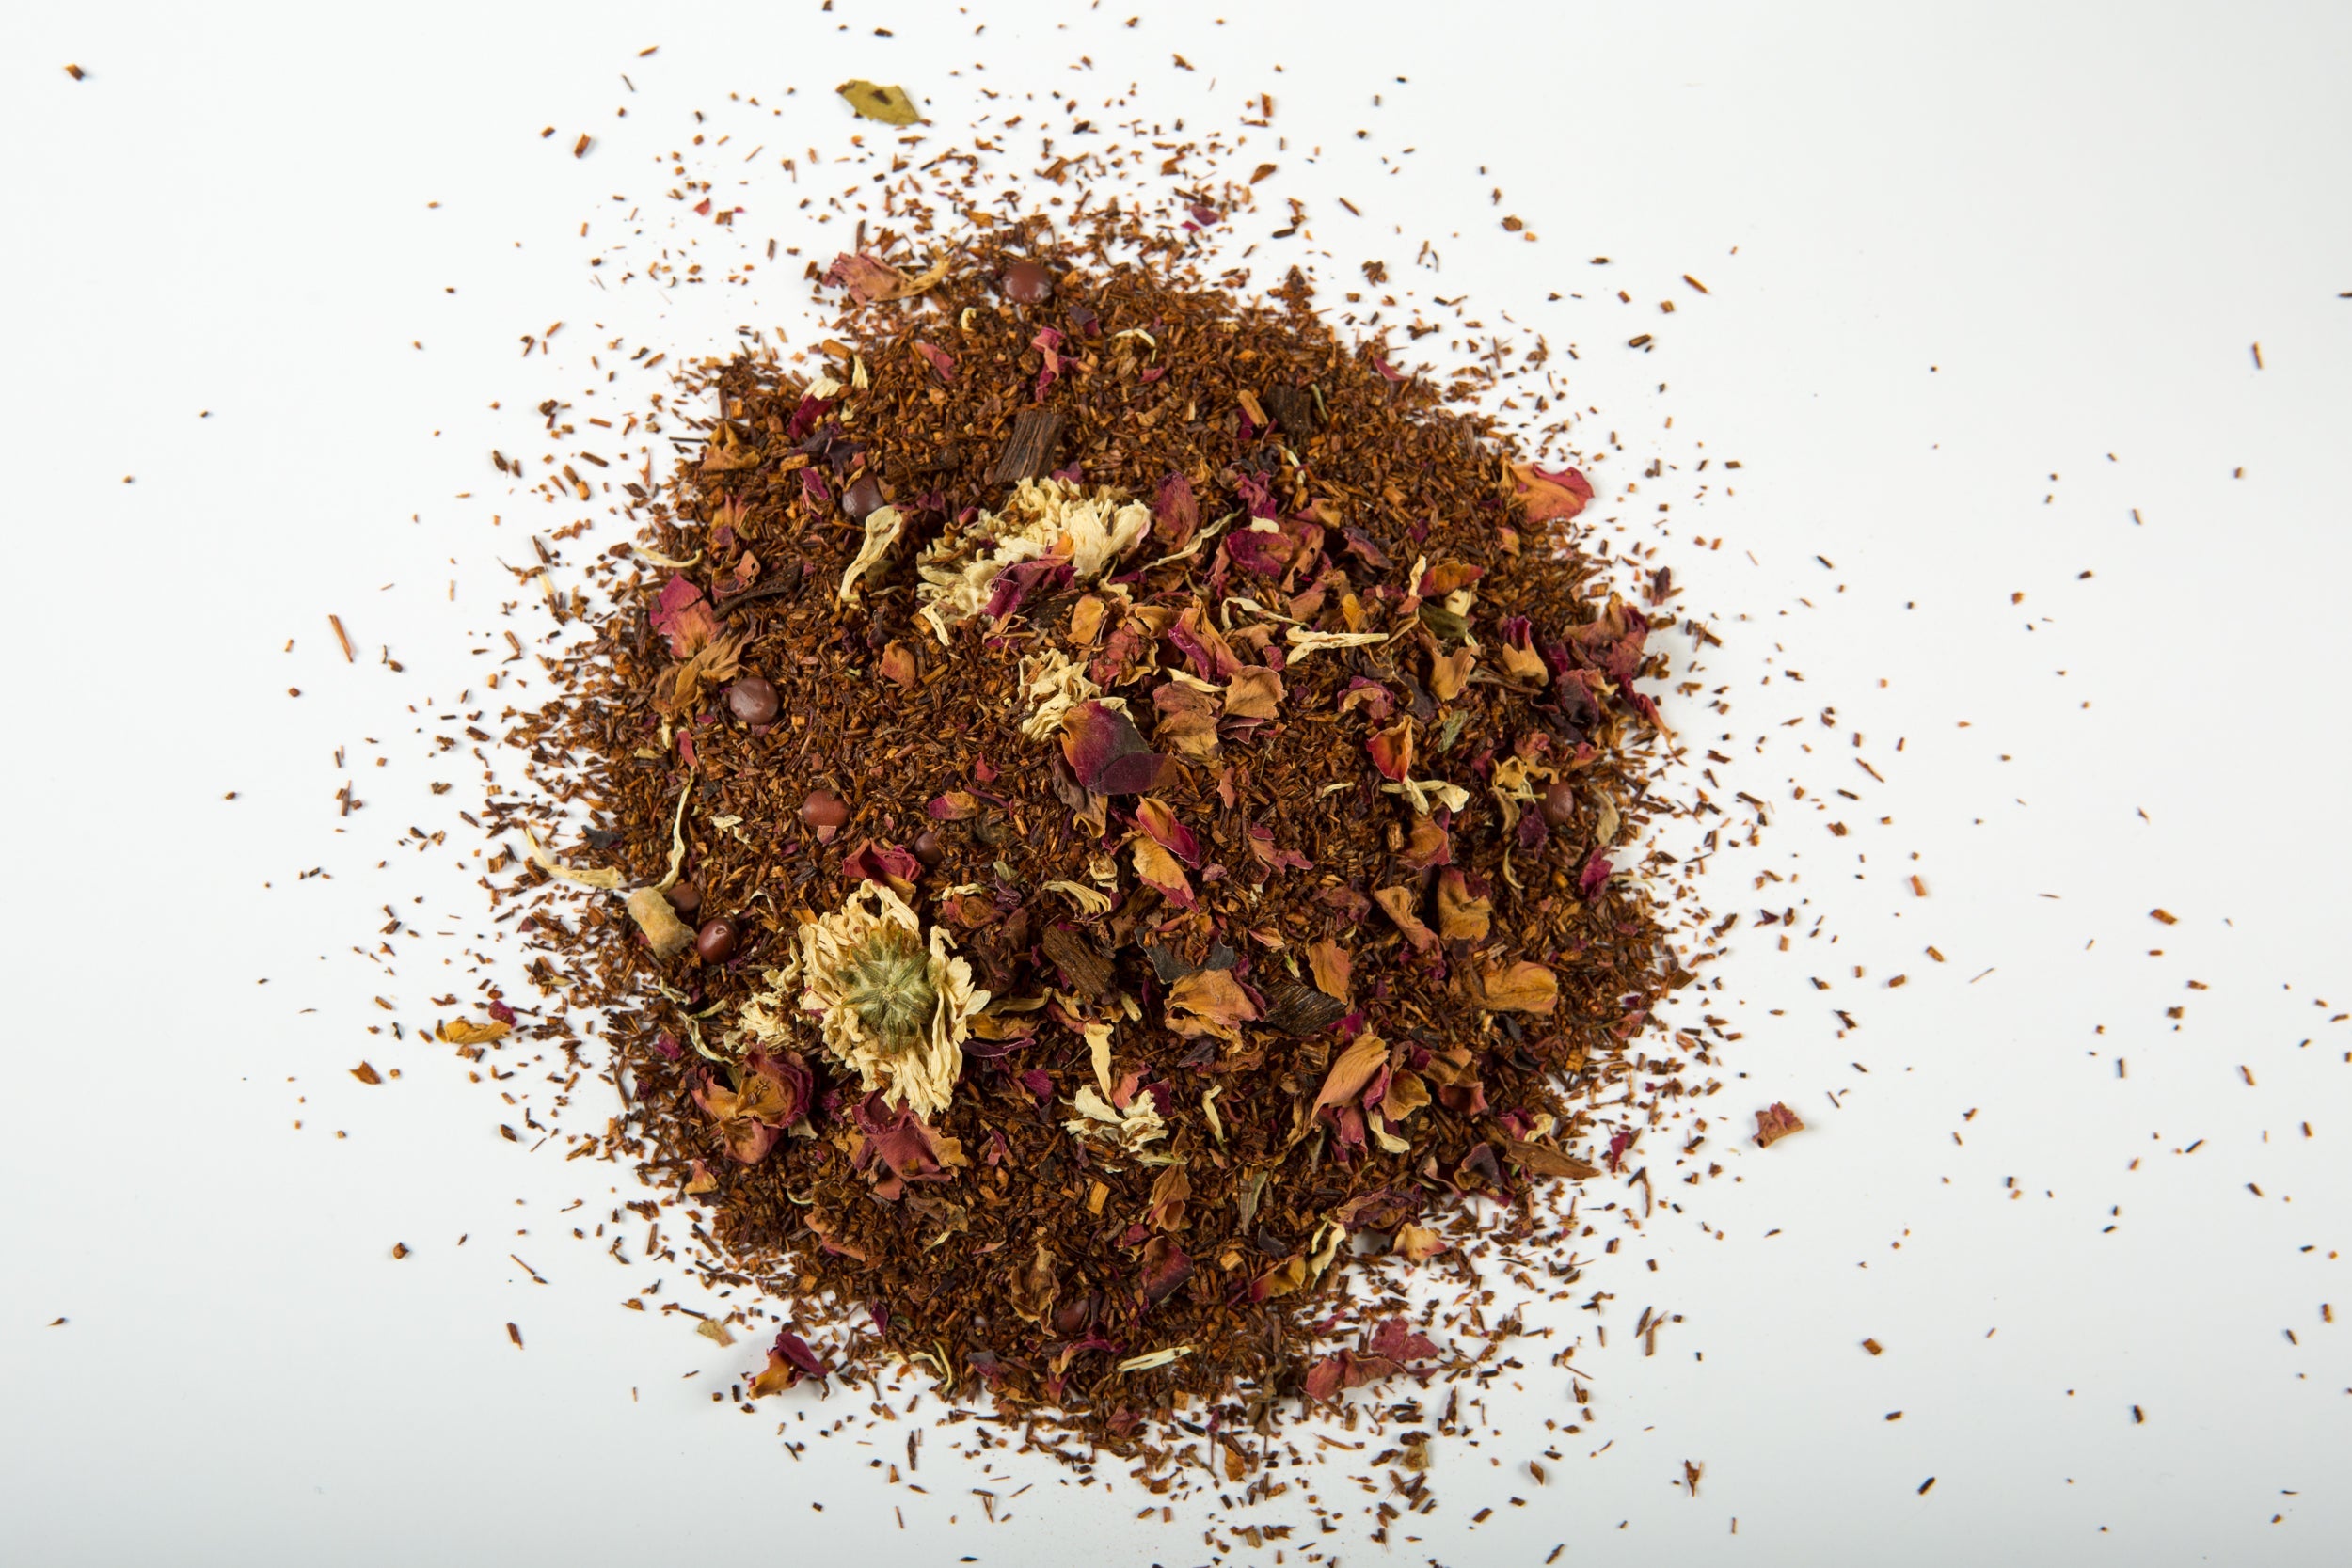 A pile of the Calm & Carry On loose-leaf tea.